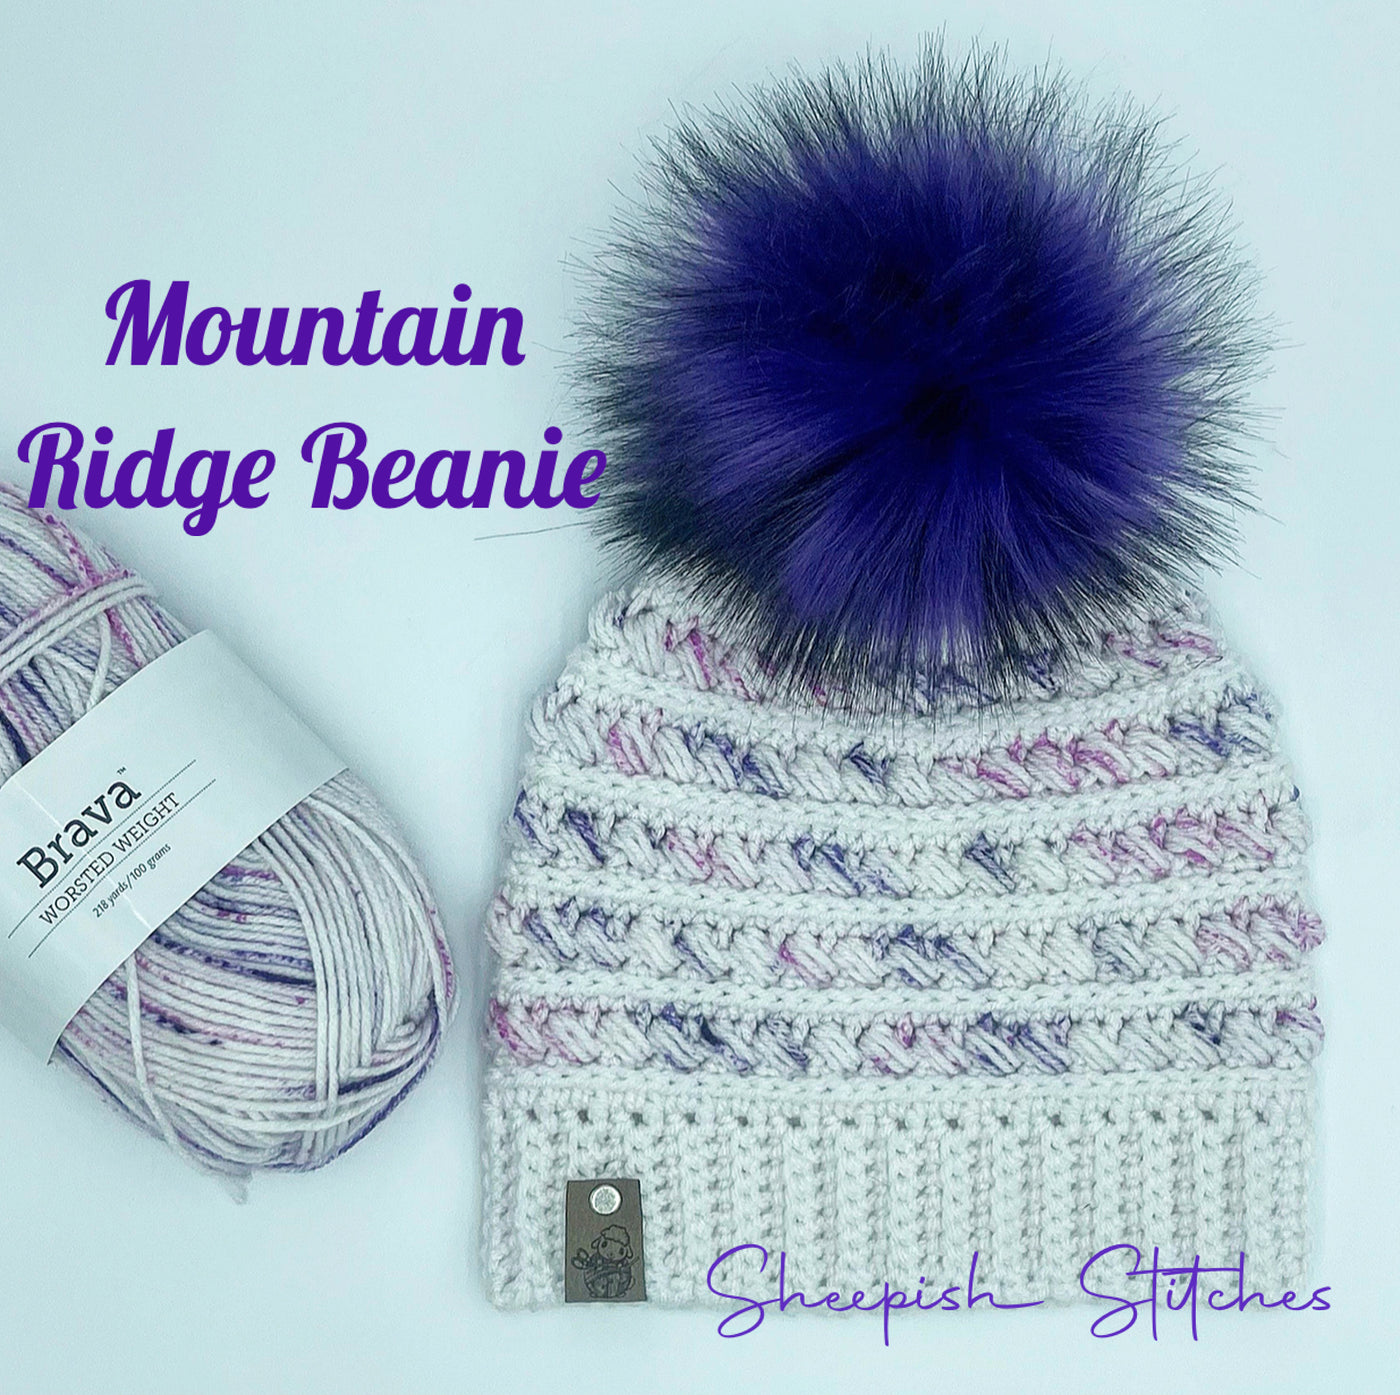 Mountain Ridge Beanie Crochet Pattern by Sheepish Stitches